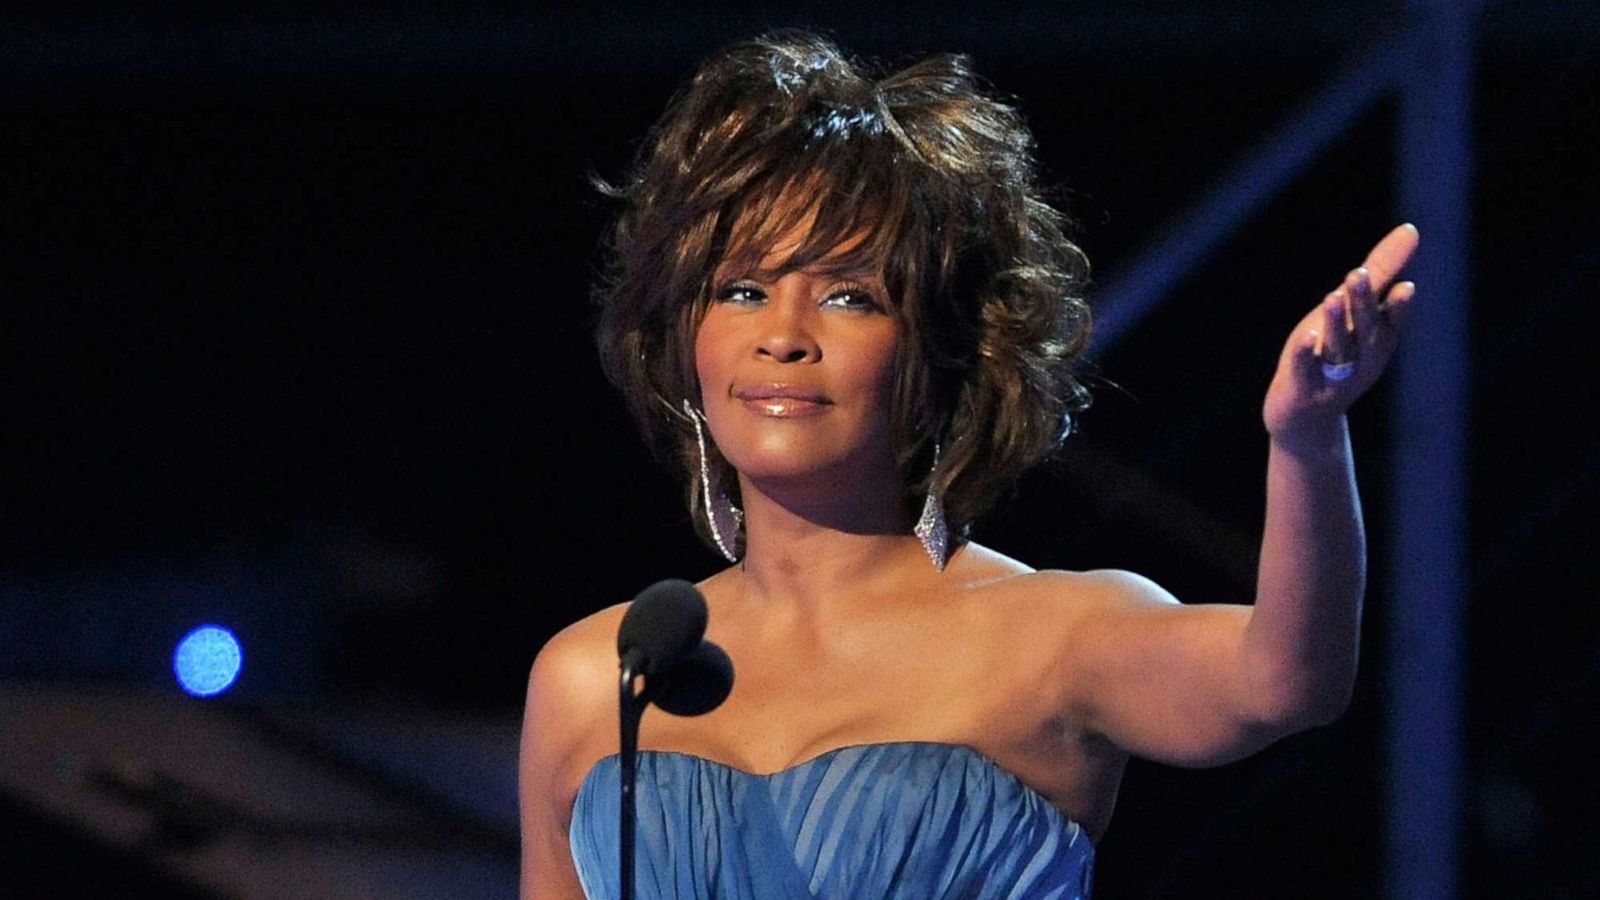 Whitney Houston's “I Will Always Love You” video reaches a billion